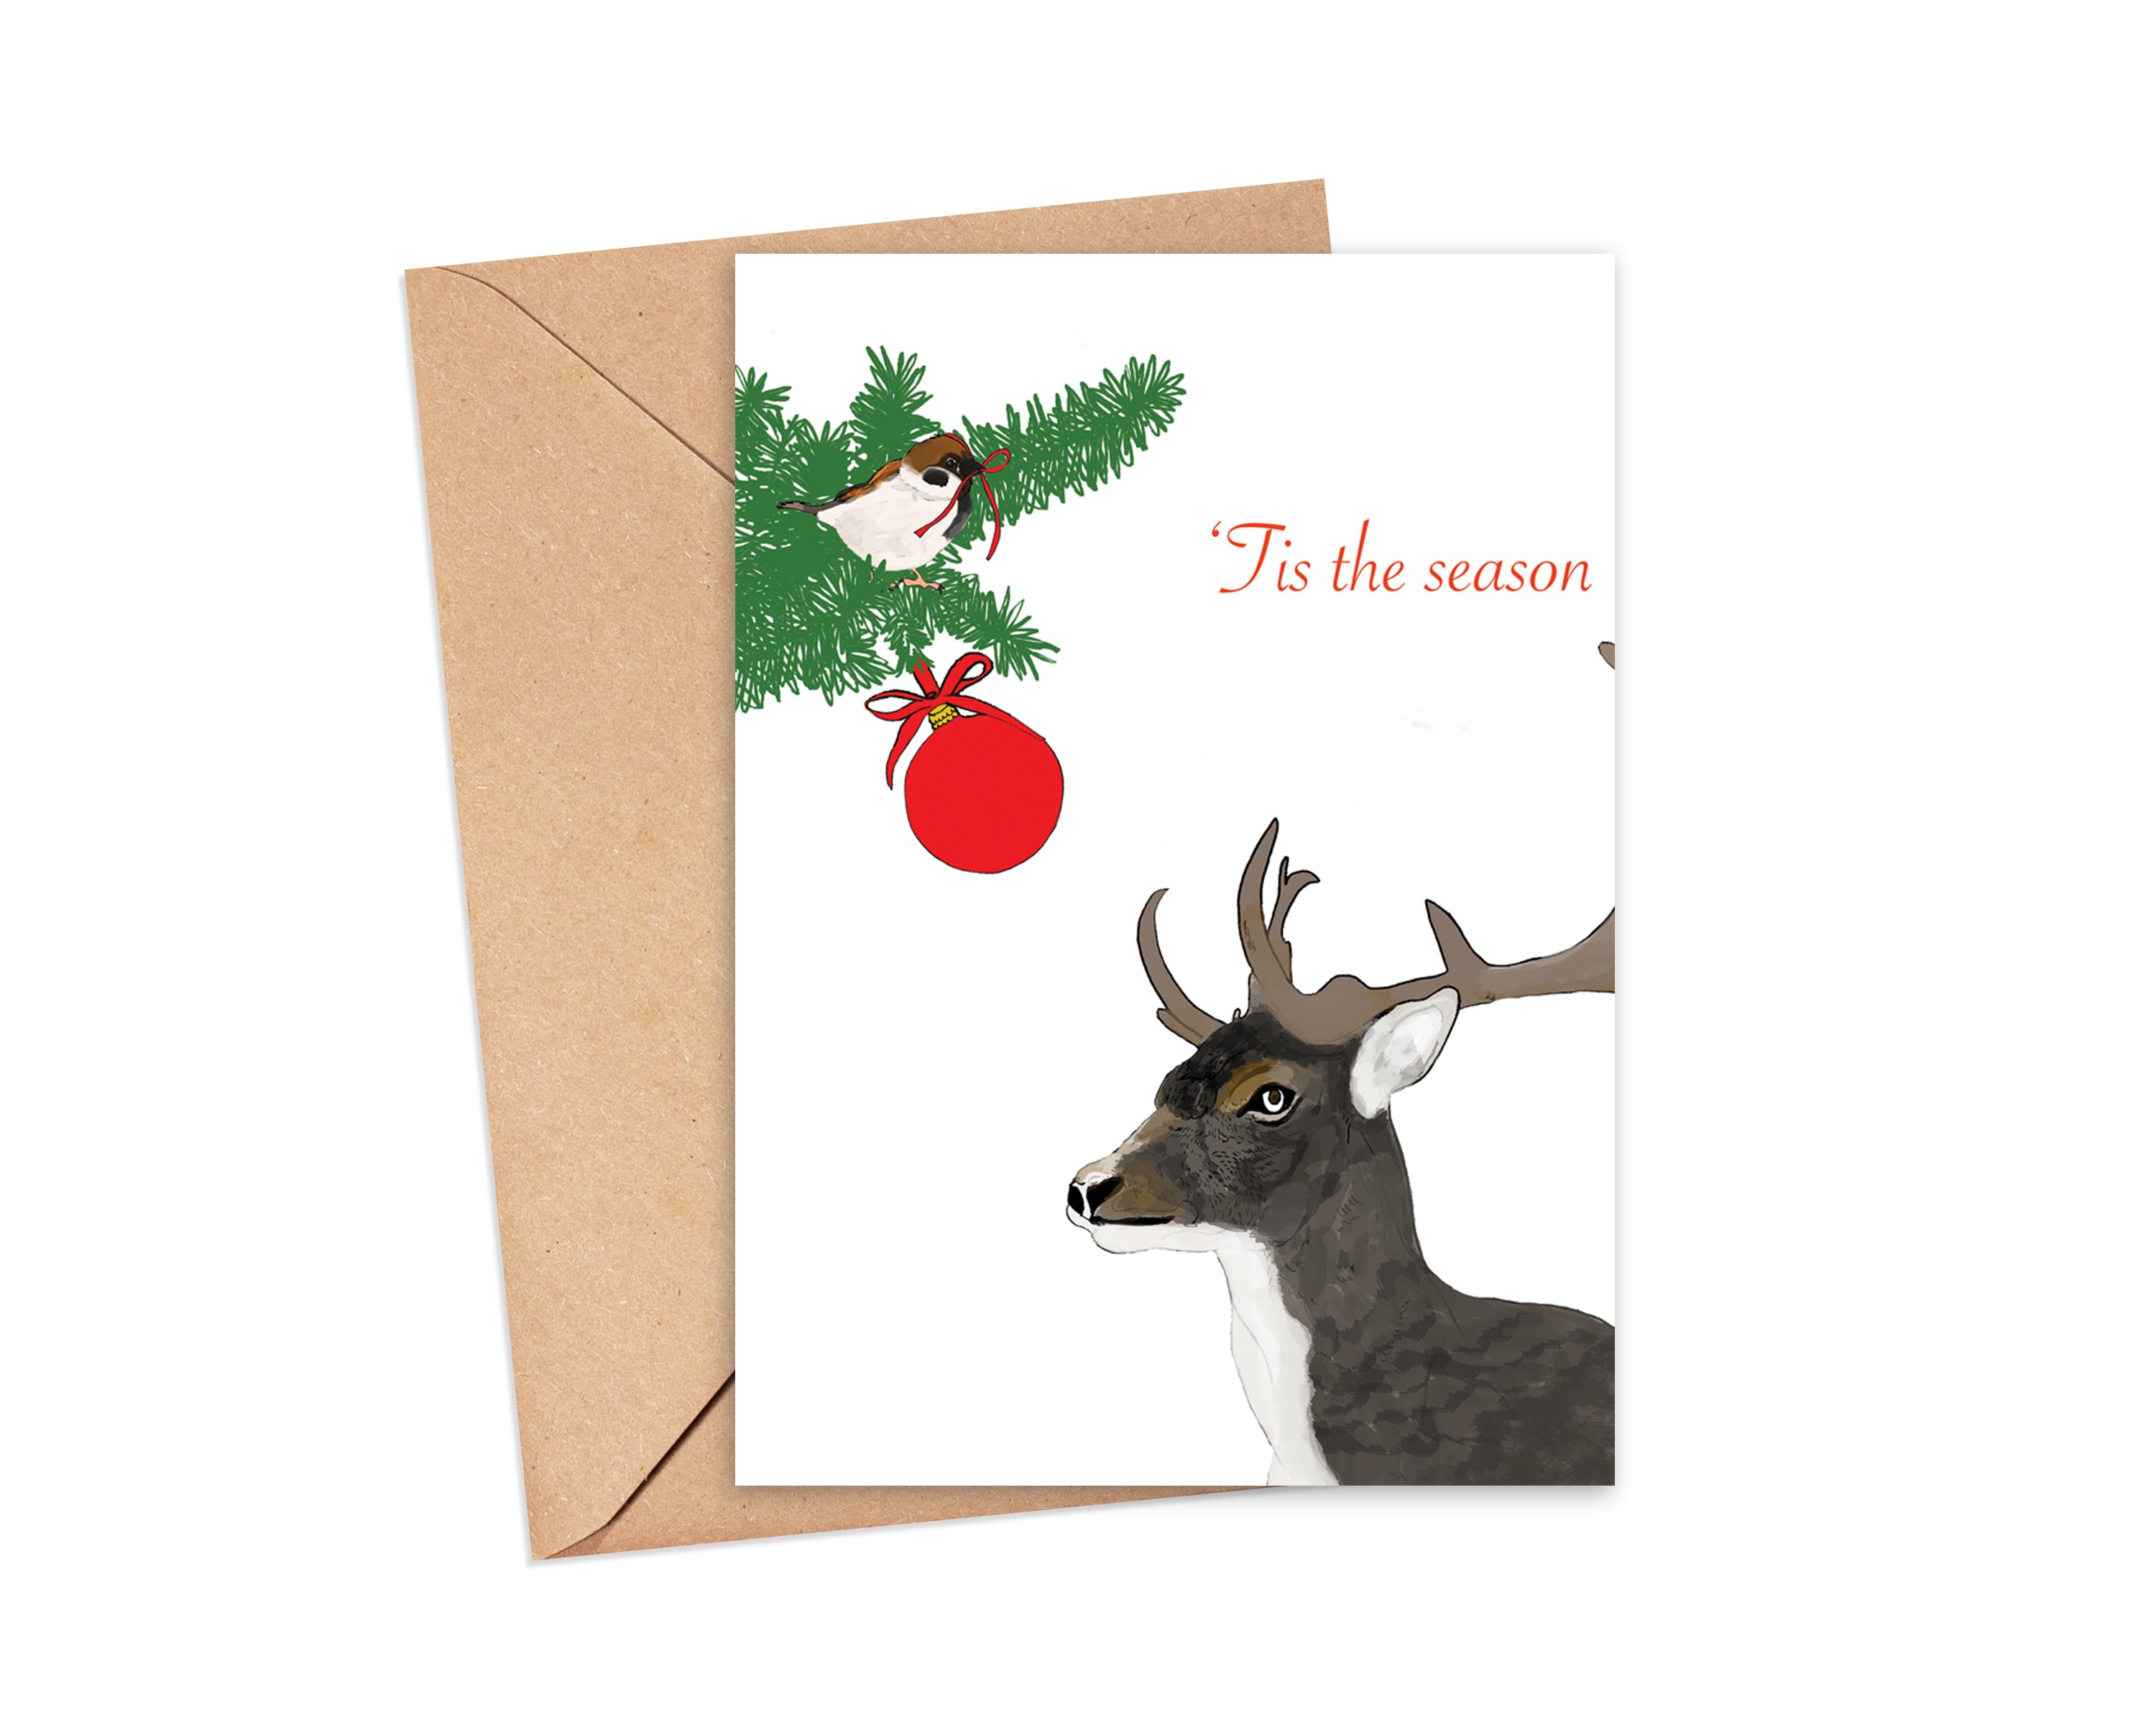 "Tis' the season" Blank Card